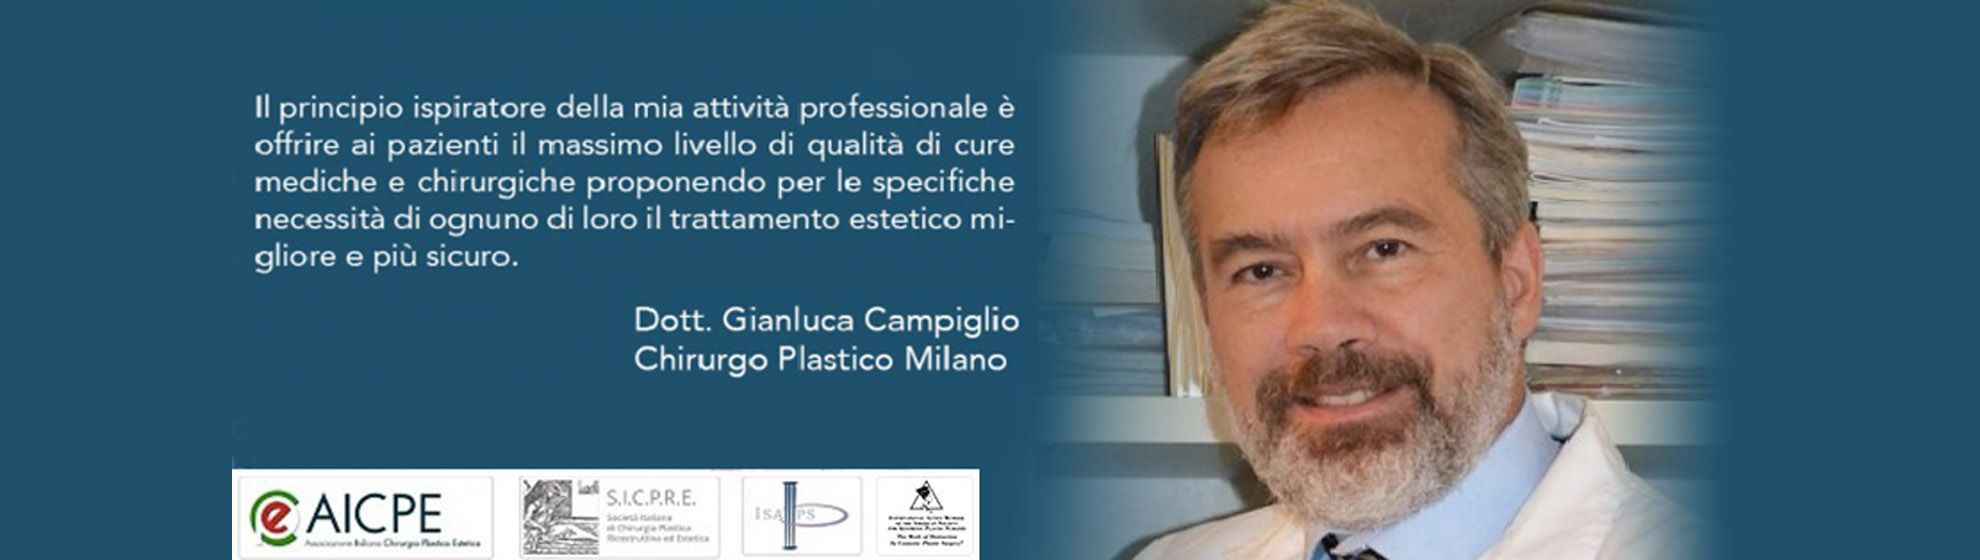 Dottor Gianluca Campiglio